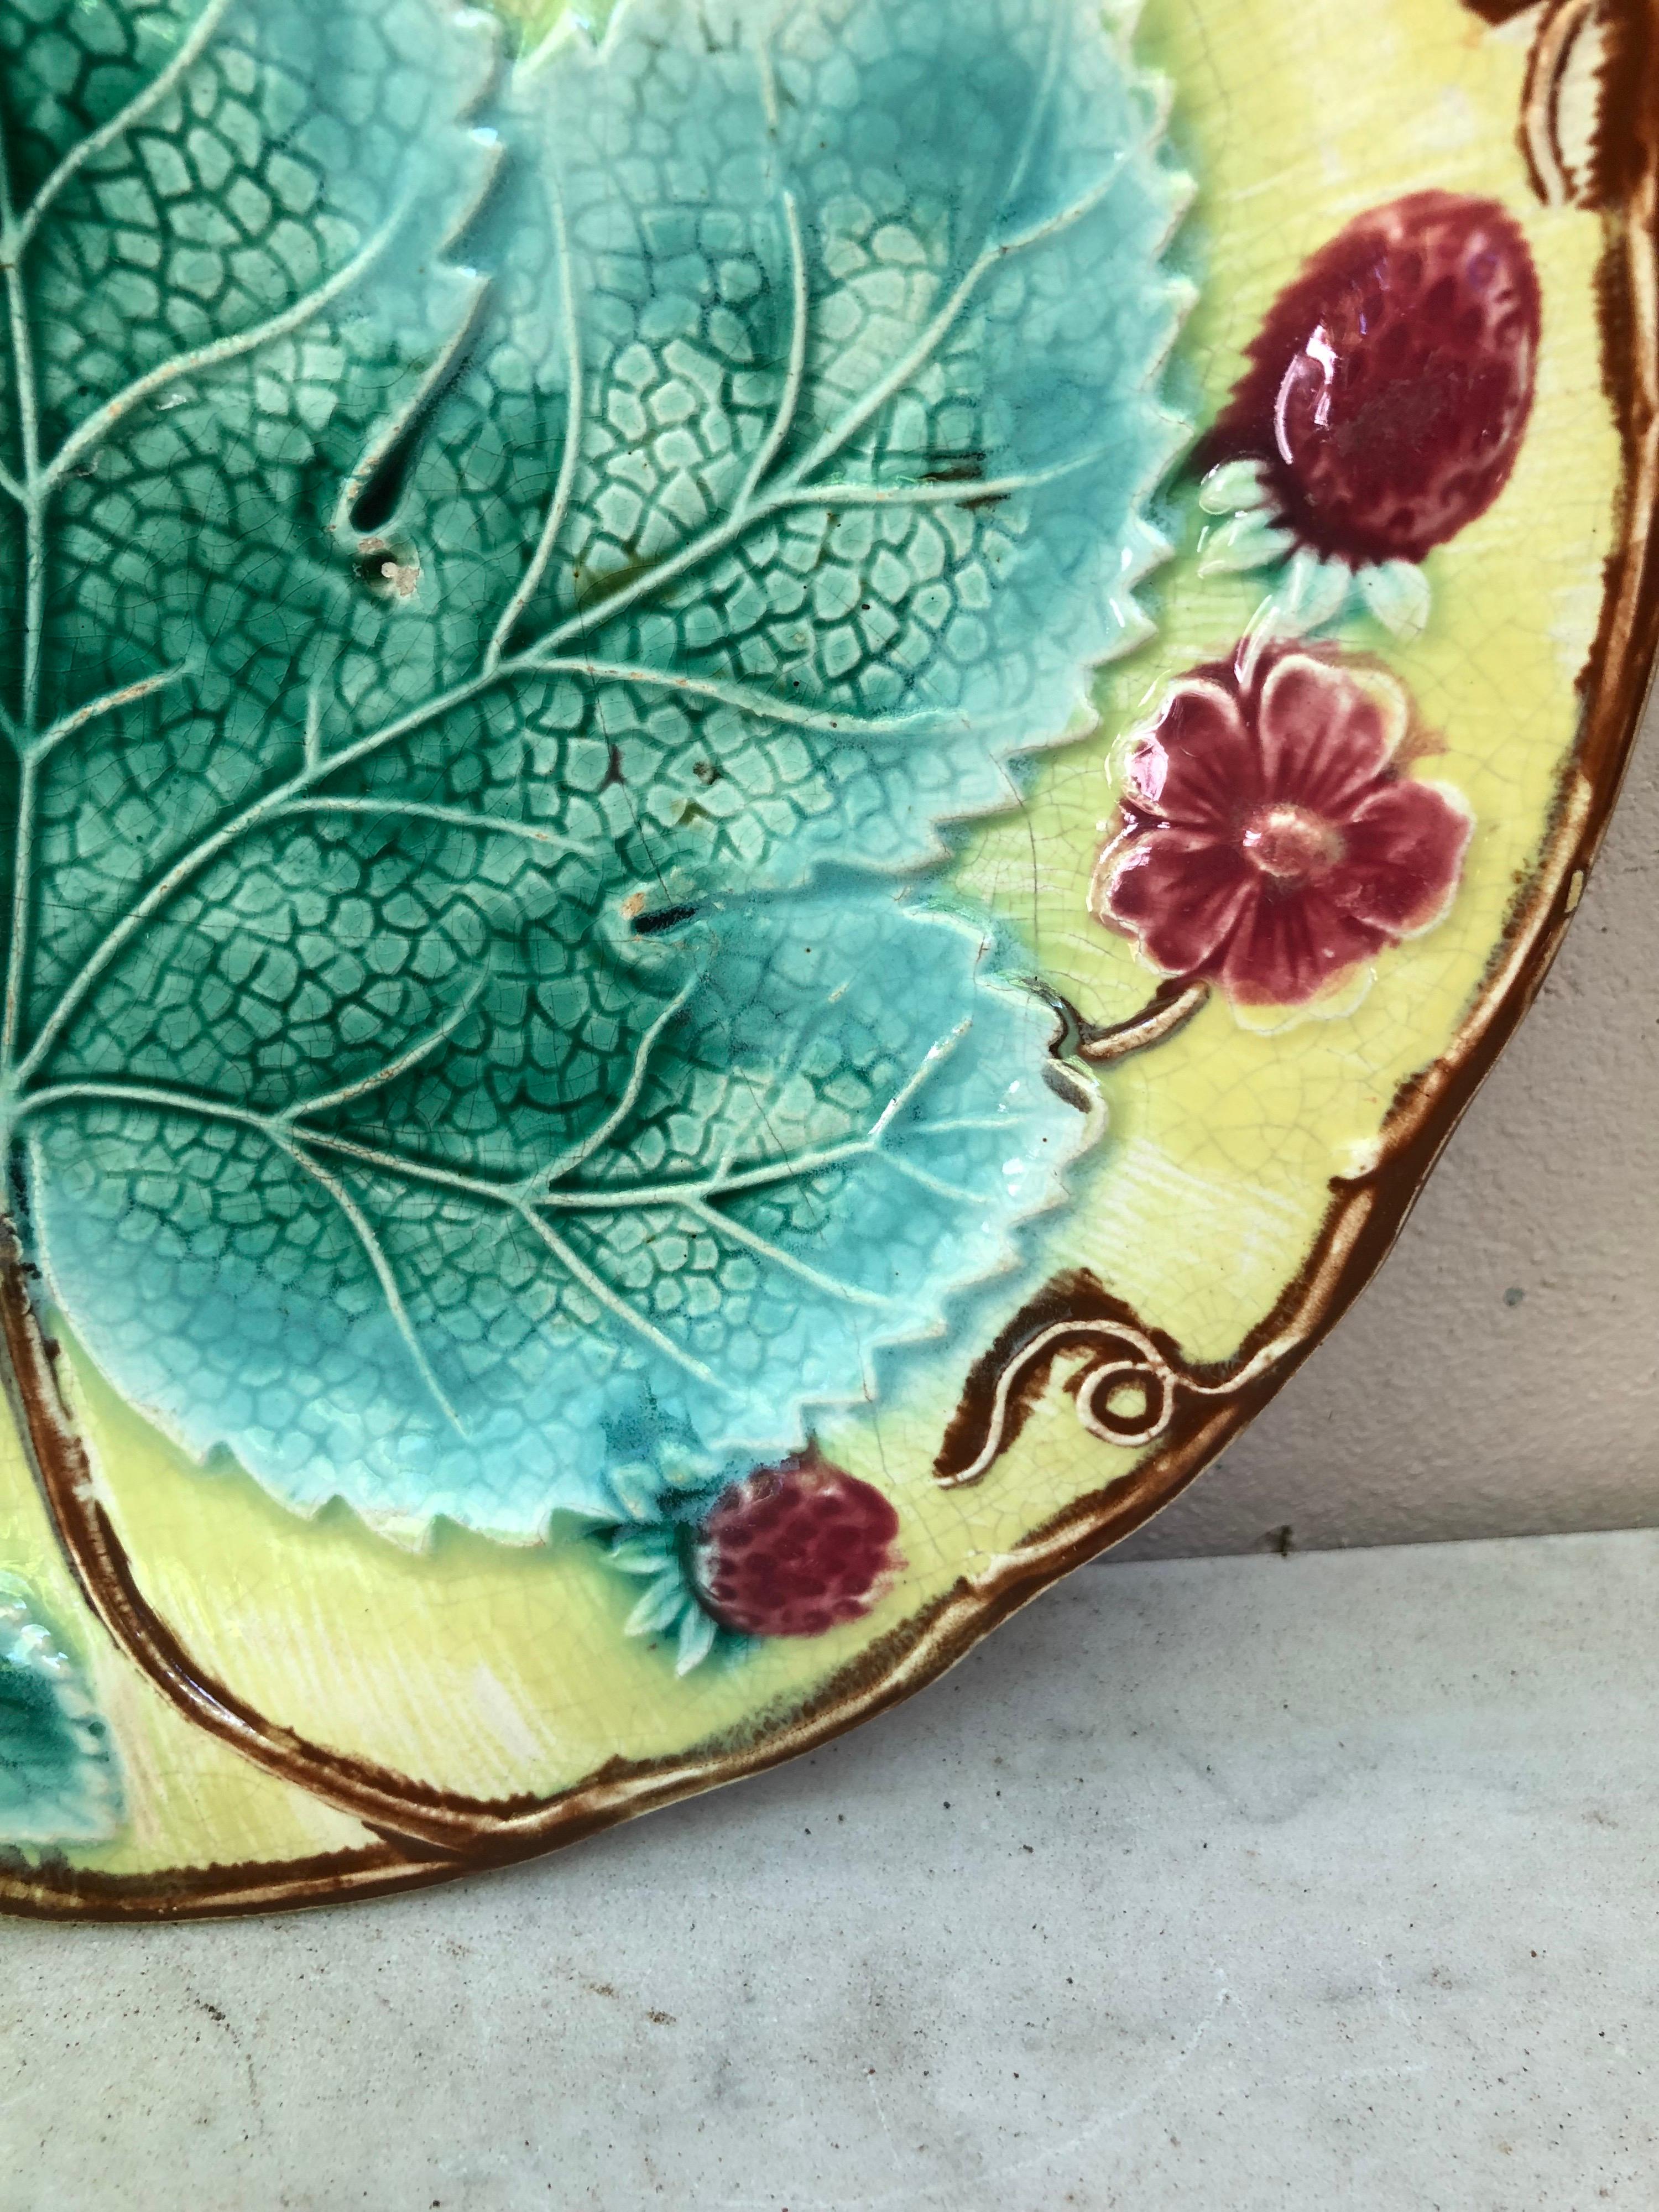 English Majolica vine & strawberries plate, circa 1880.
Very rare color.
Hairline.